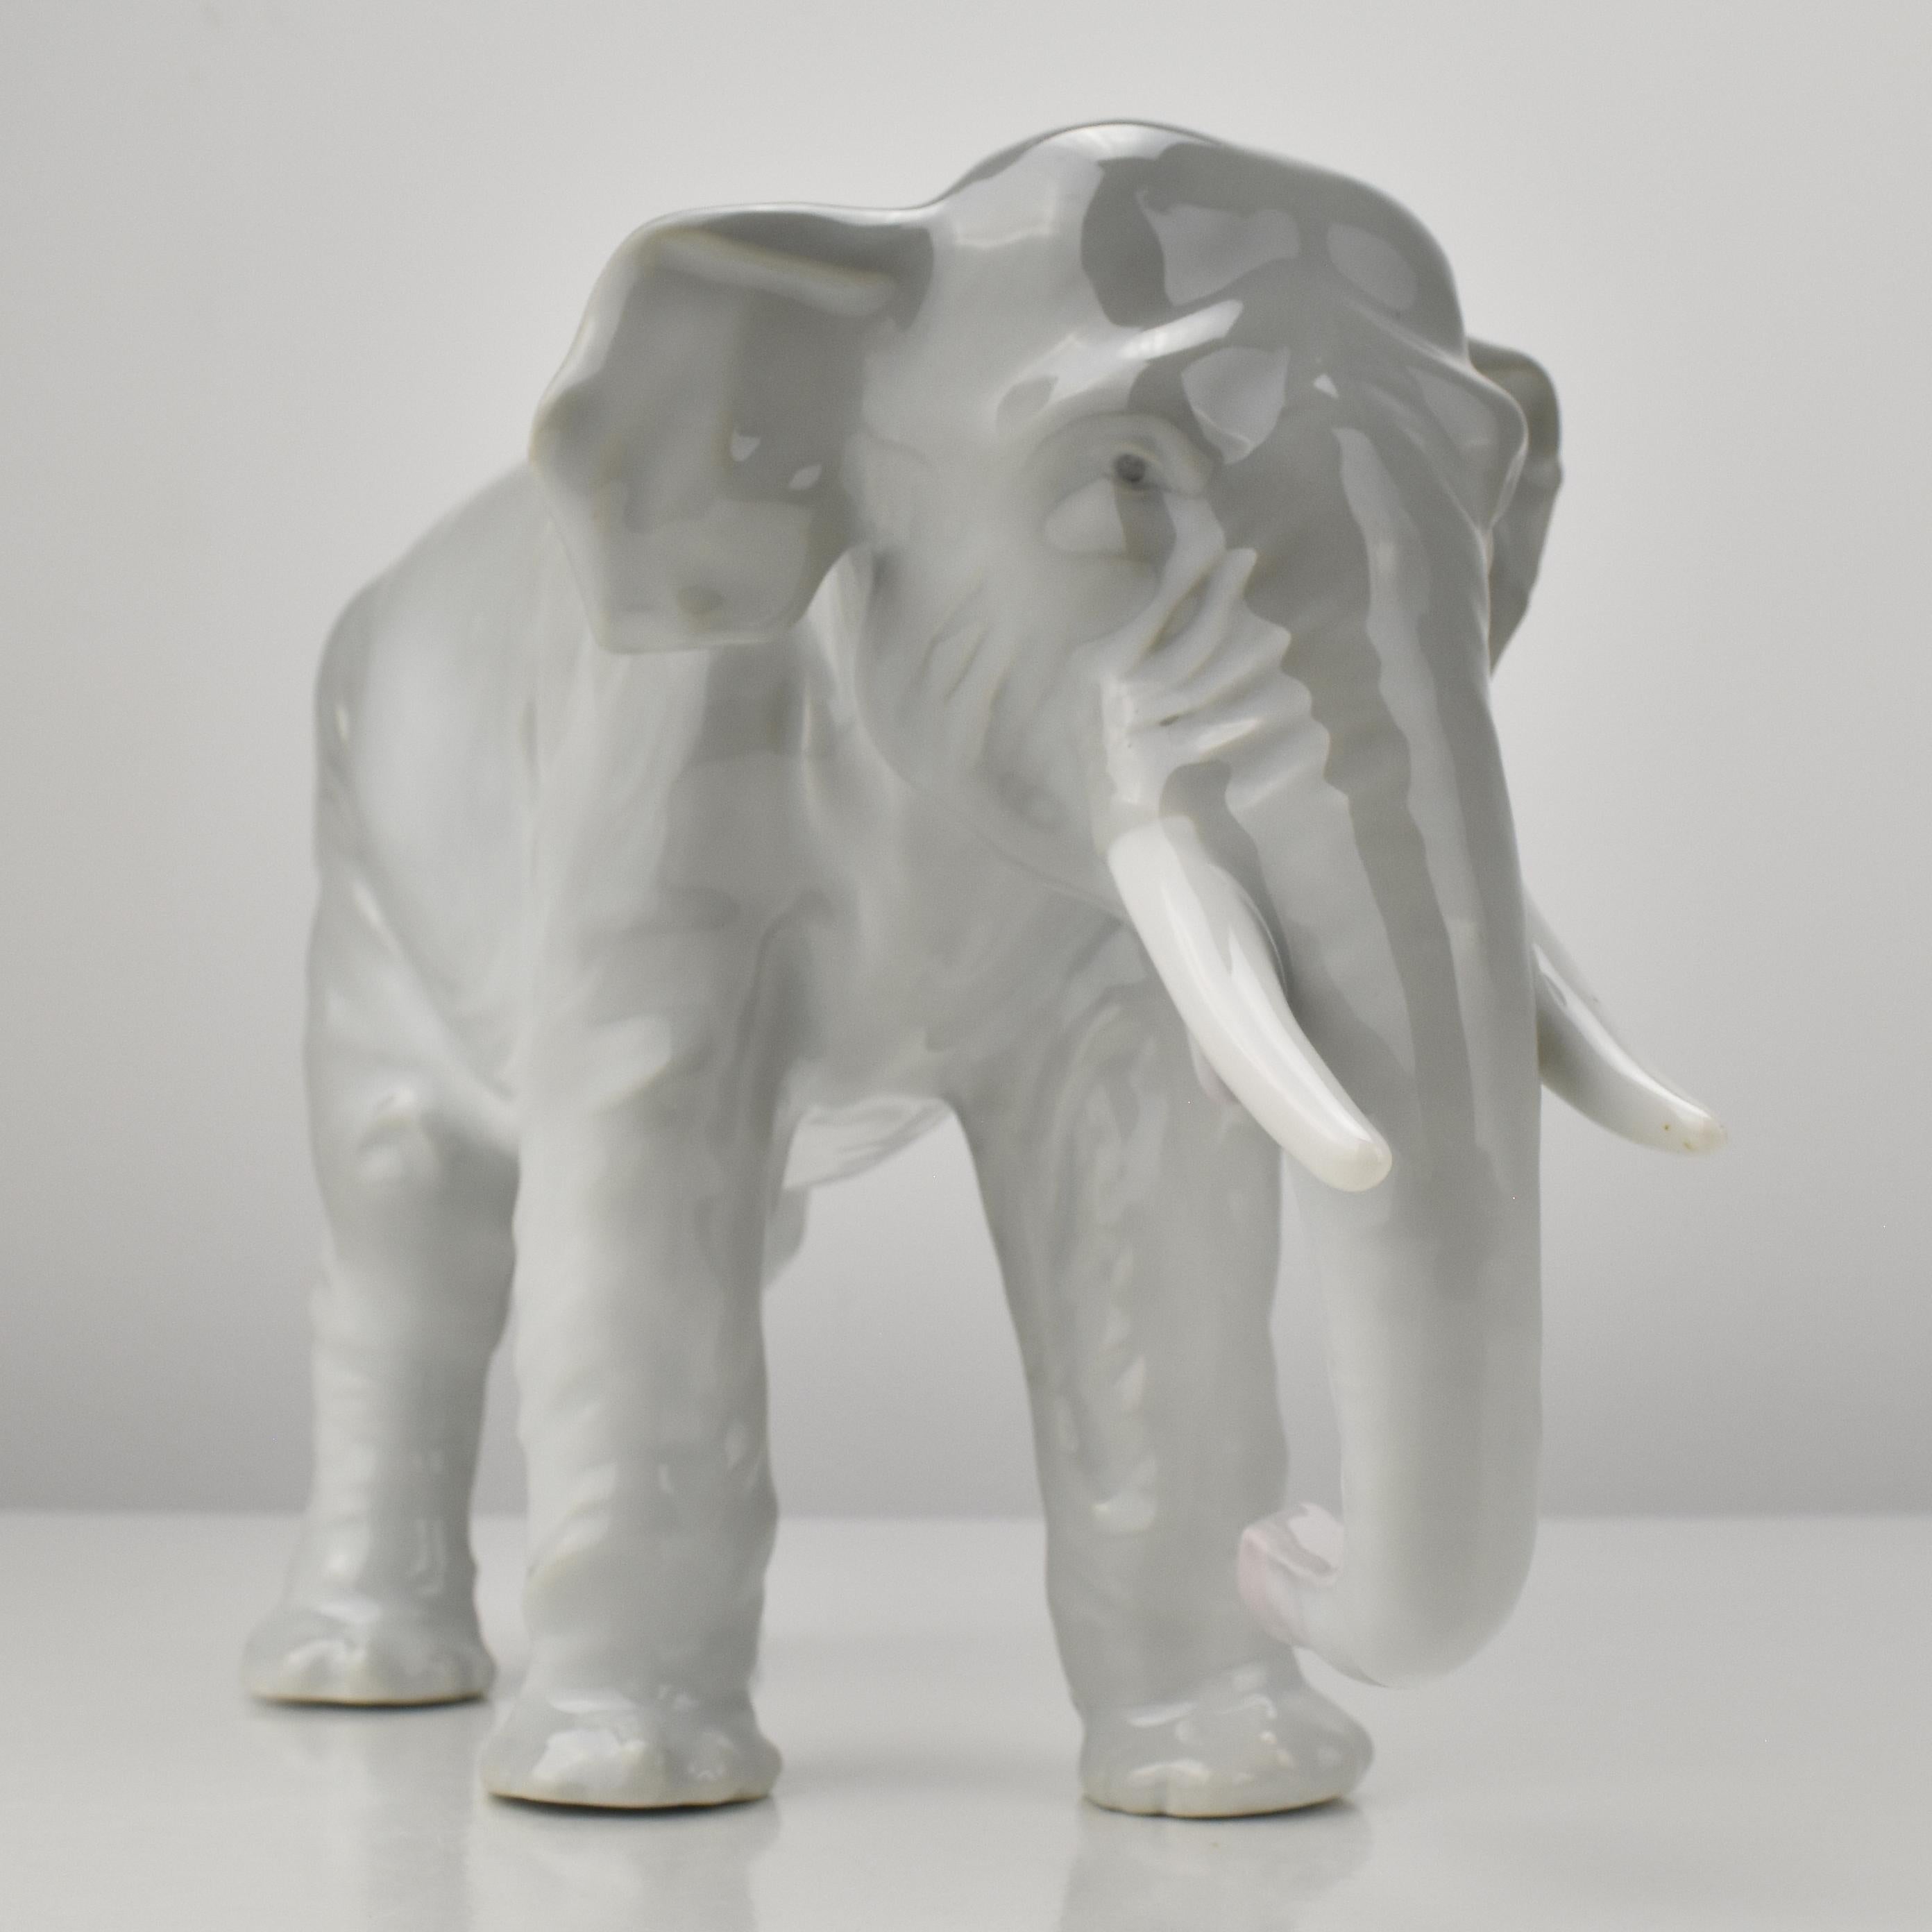 Antique Finely Crafted Elephant Porcelain Figurine Art Nouveau For Sale 2